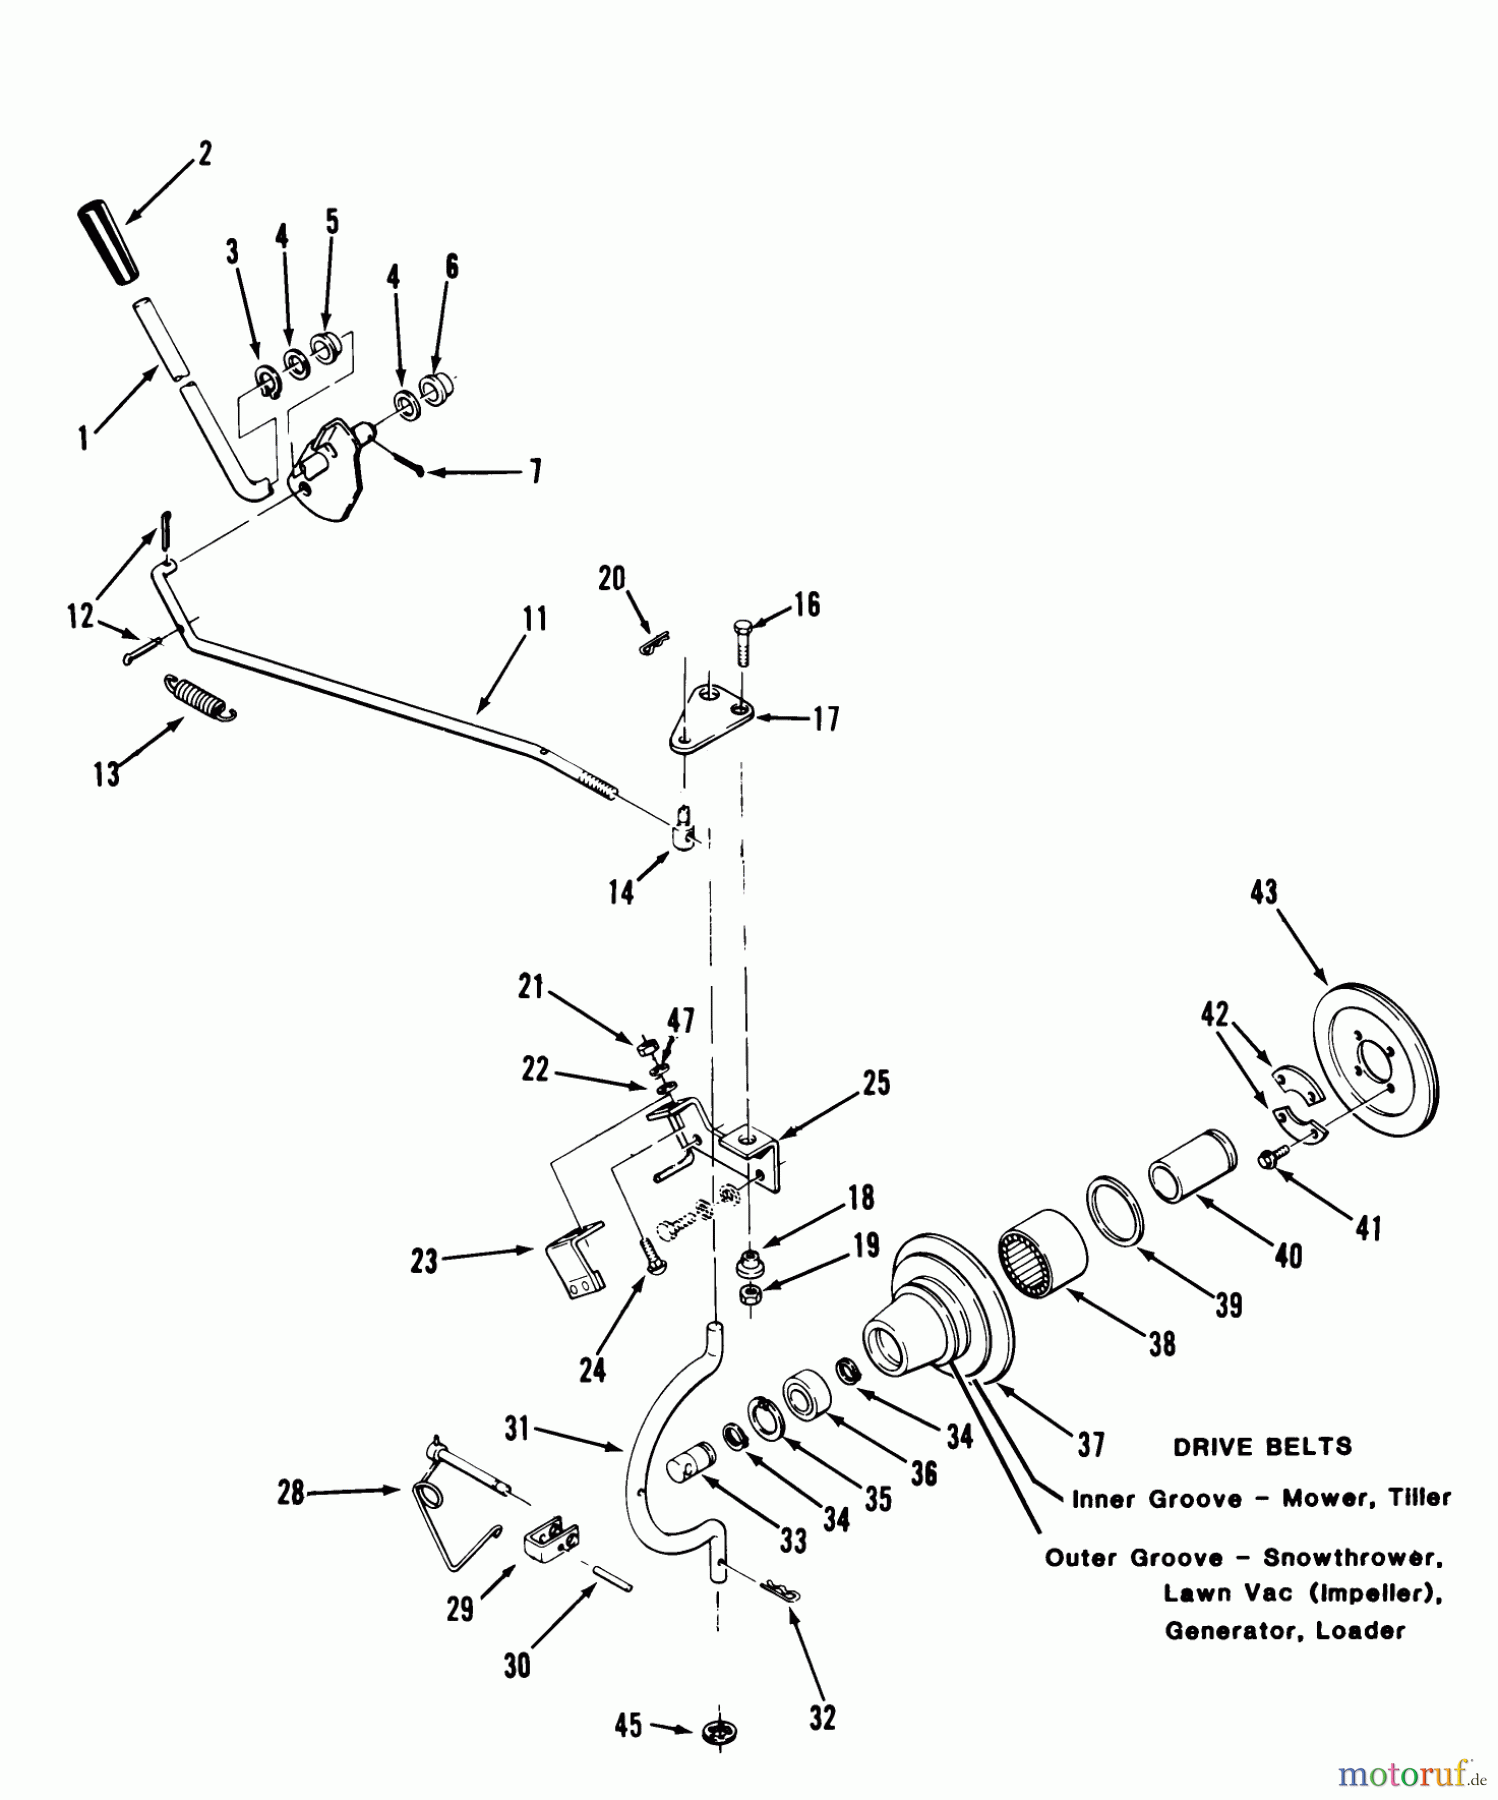  Toro Neu Mowers, Lawn & Garden Tractor Seite 1 31-18OE02 (518-H) - Toro 518-H Garden Tractor, 1989 PTO CLUTCH AND CONTROL